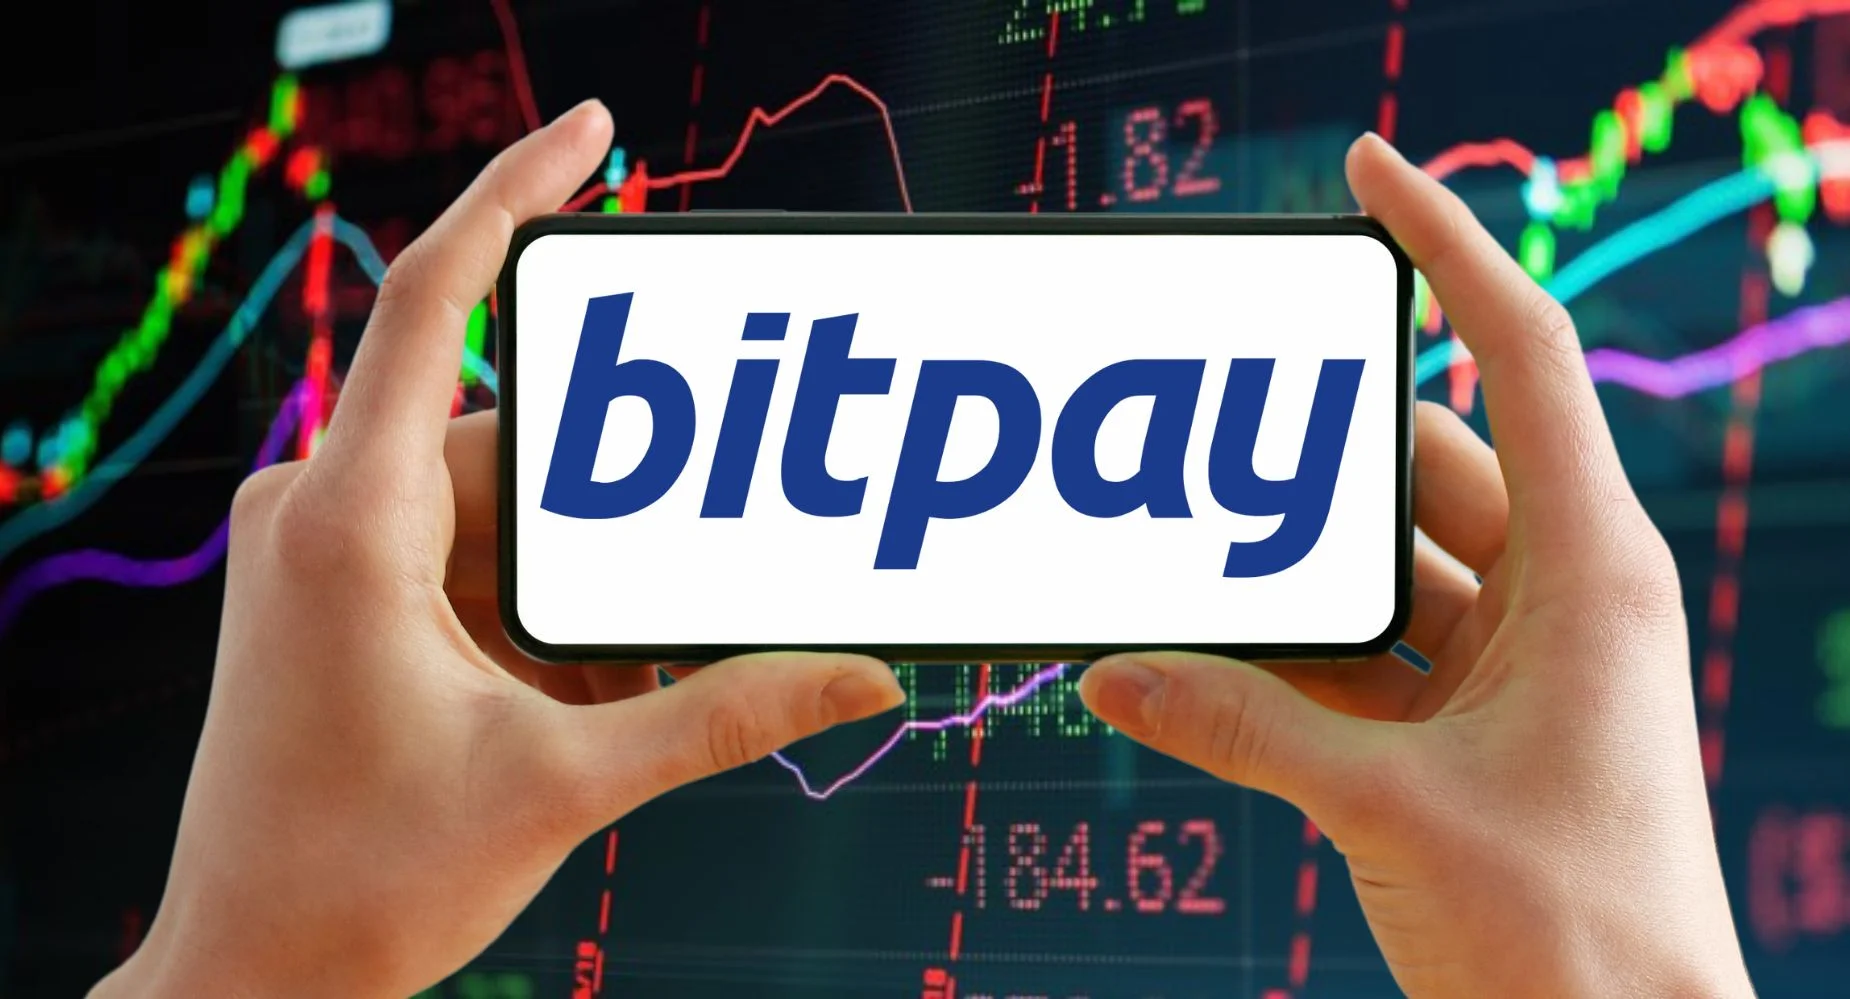 Buy BitPay Accounts